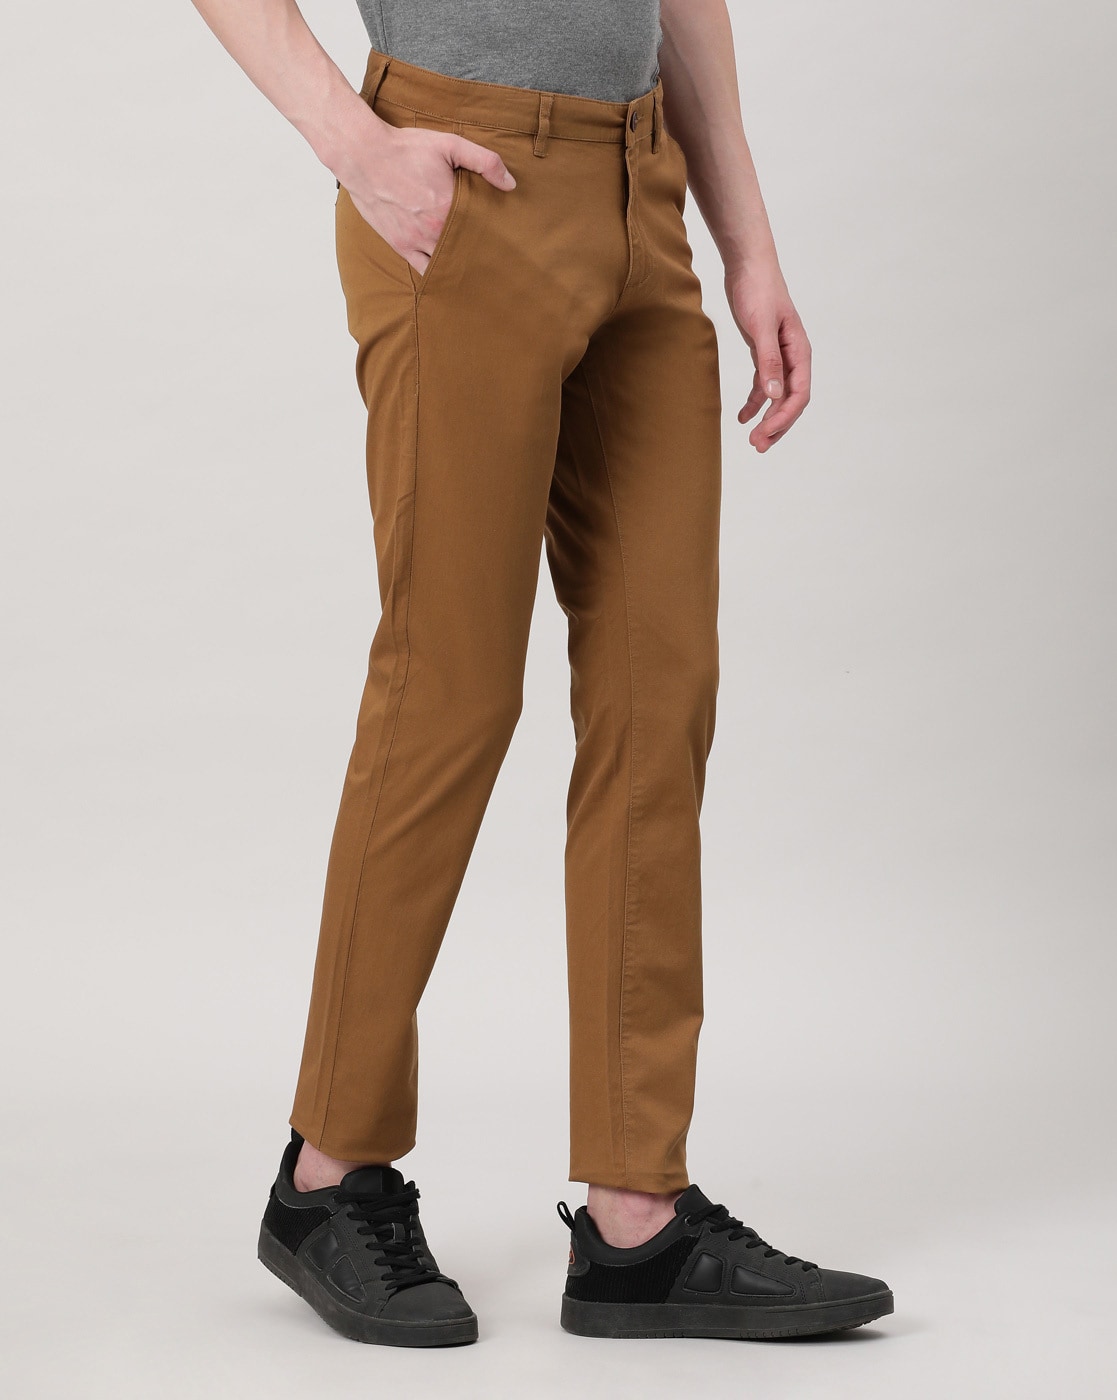 Buy Men's Khaki Slim Fit Hiking Pants NH500 Online | Decathlon